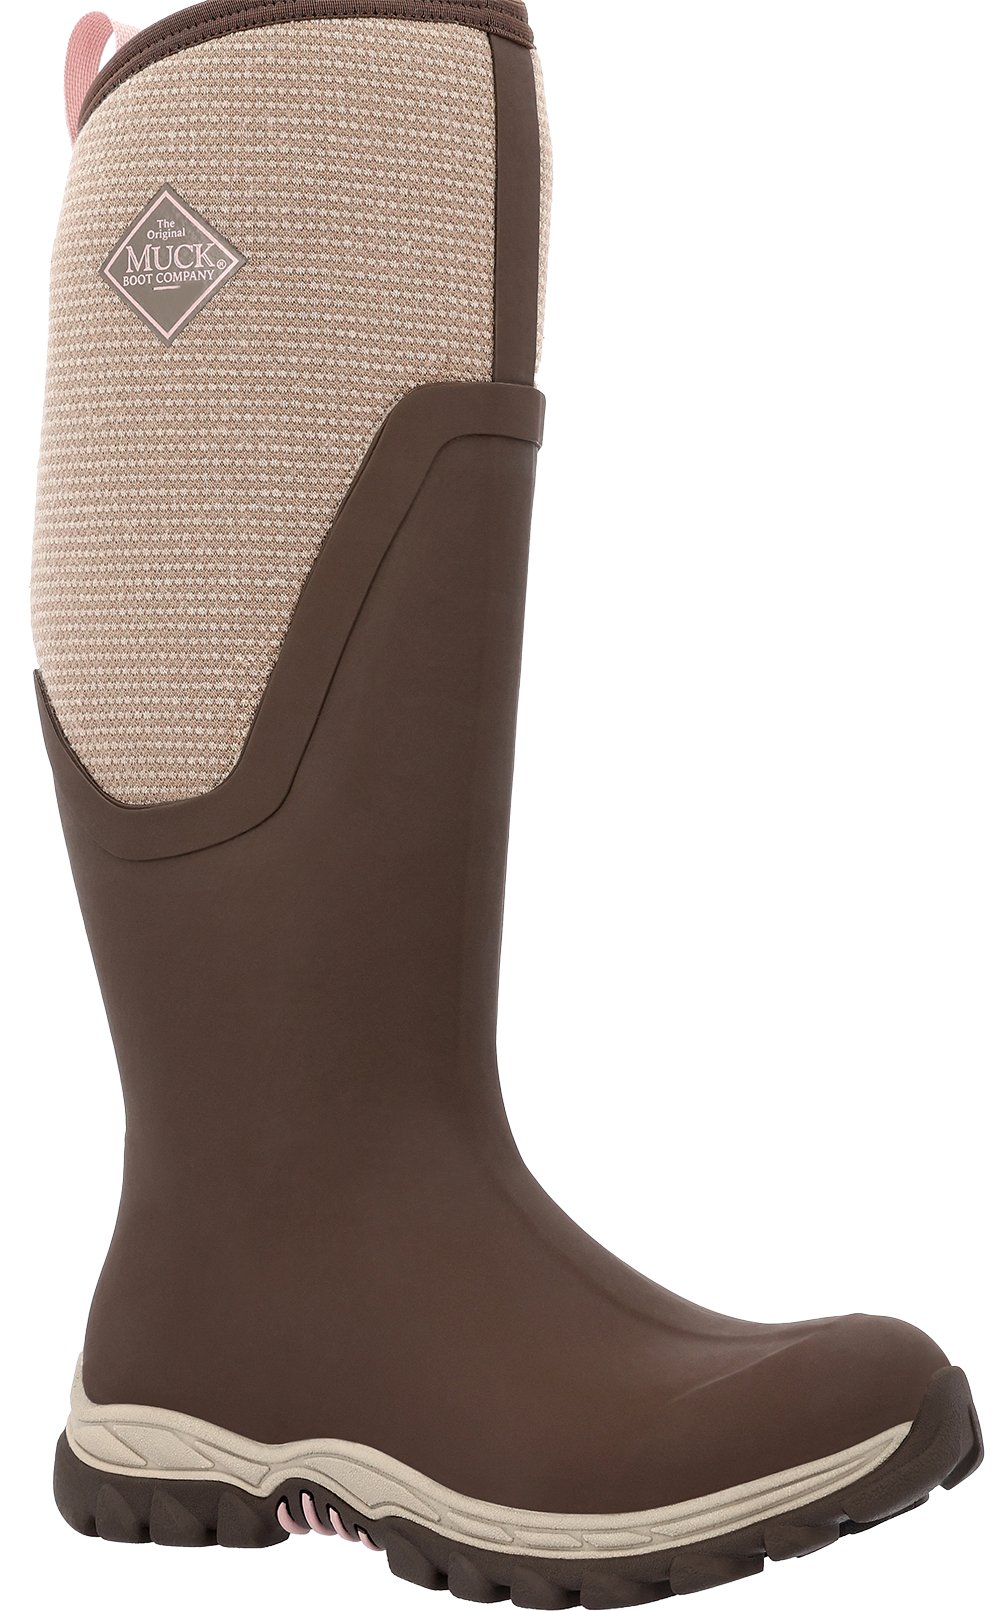 Muck Women's Arctic Sport II Tall Chocolate/Walnut Brown - Grady’s Feet Essentials - Muck